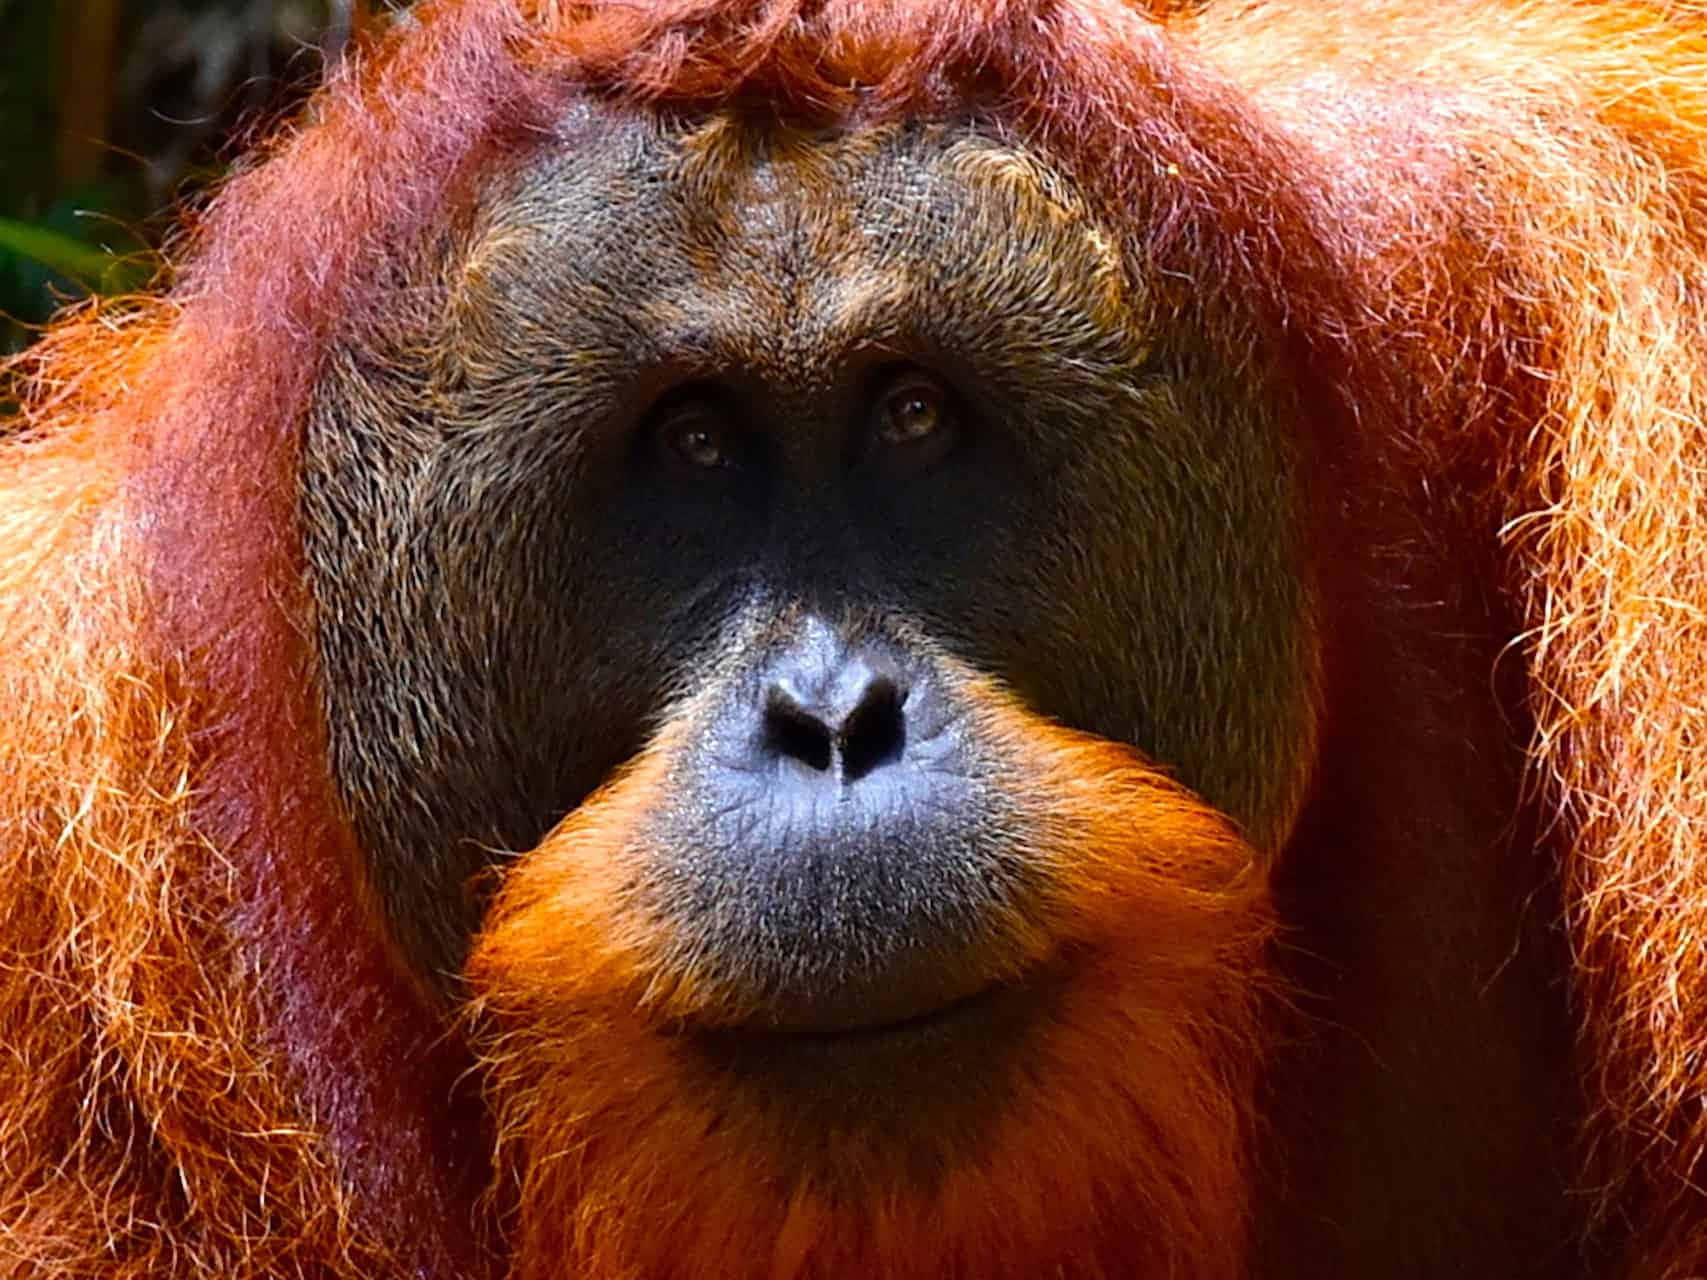 An Orangutan Sitting in a Tree